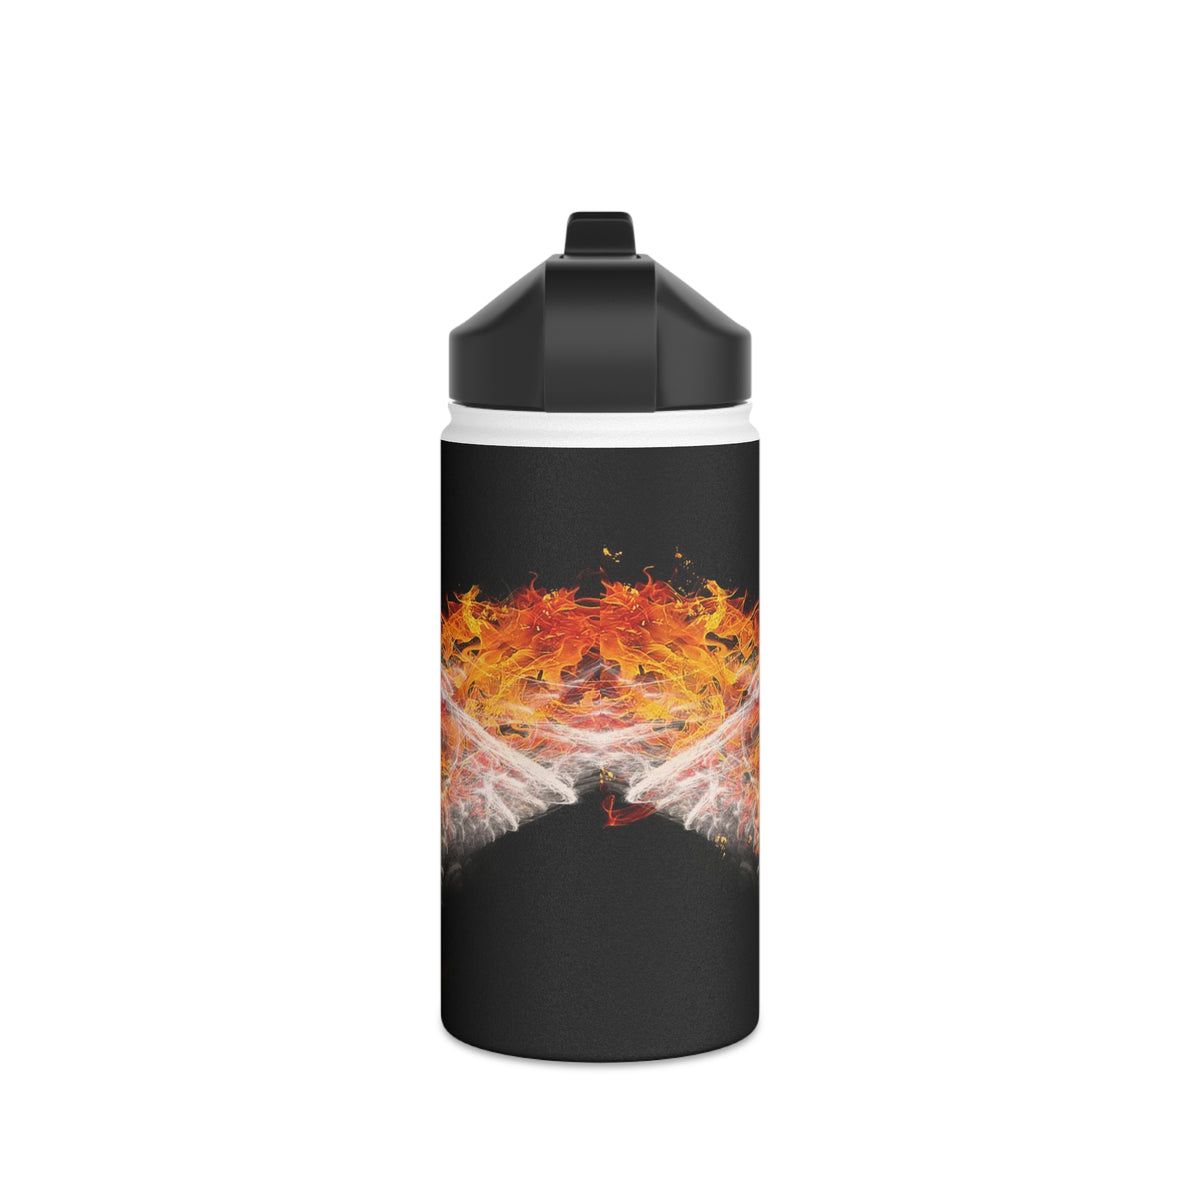 Firefighter, Stainless Steel Water Bottle